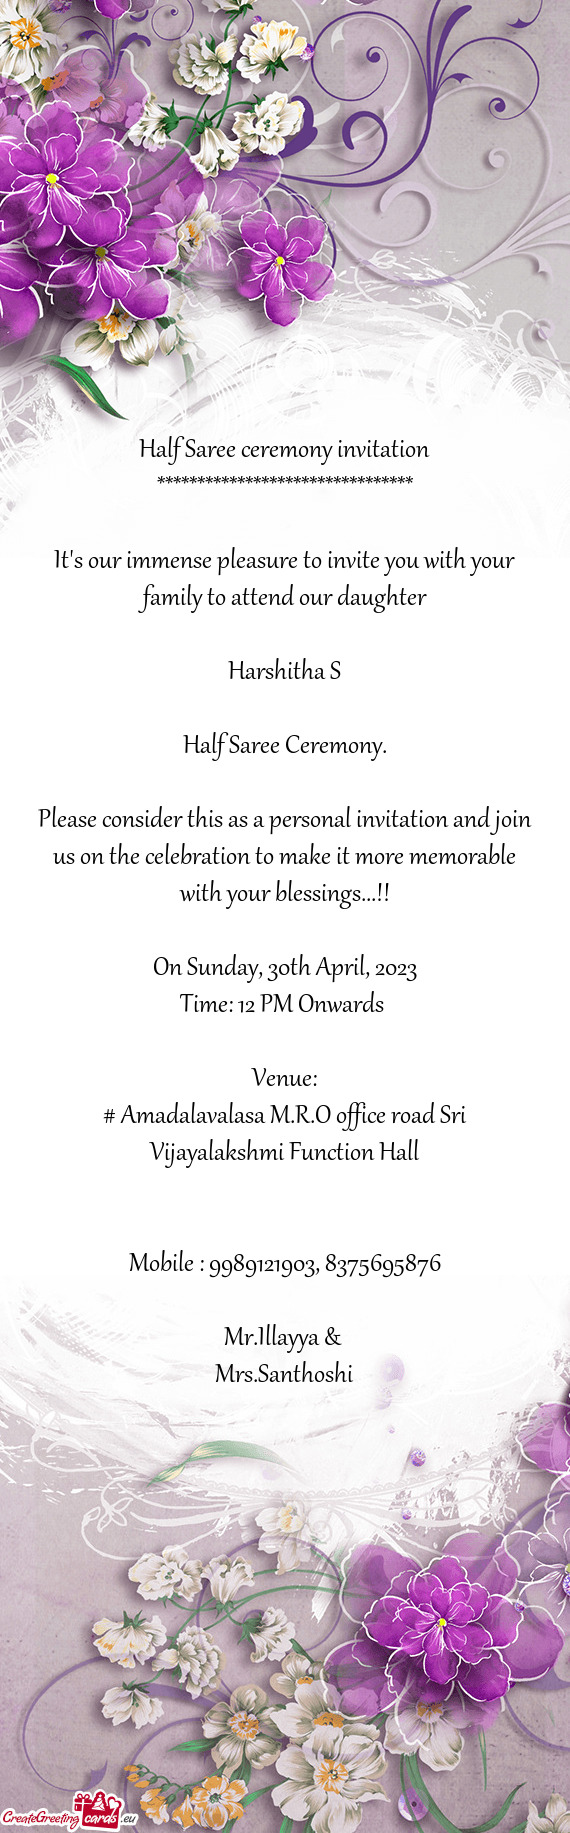 # Amadalavalasa M.R.O office road Sri Vijayalakshmi Function Hall